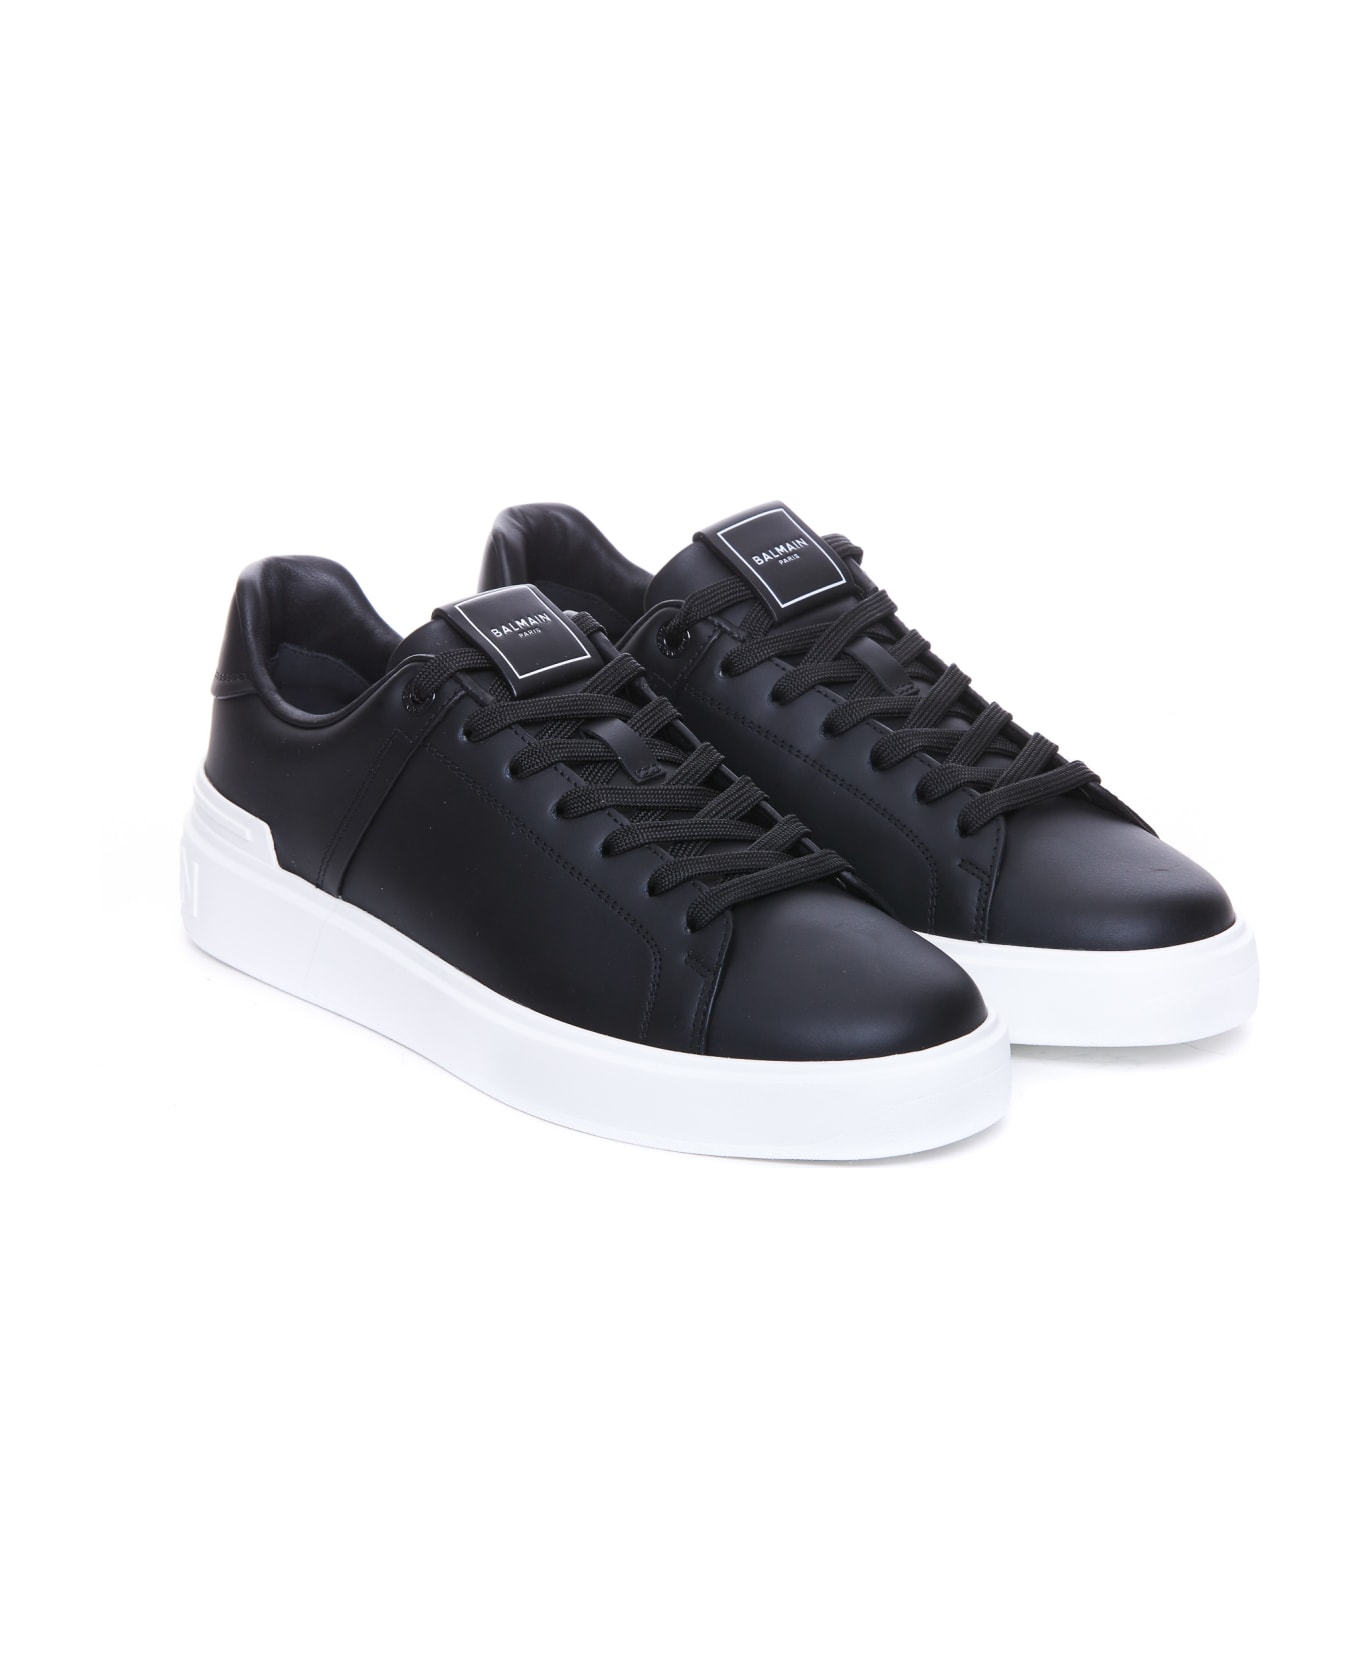 Balmain B-court Leather Sneakers - Black